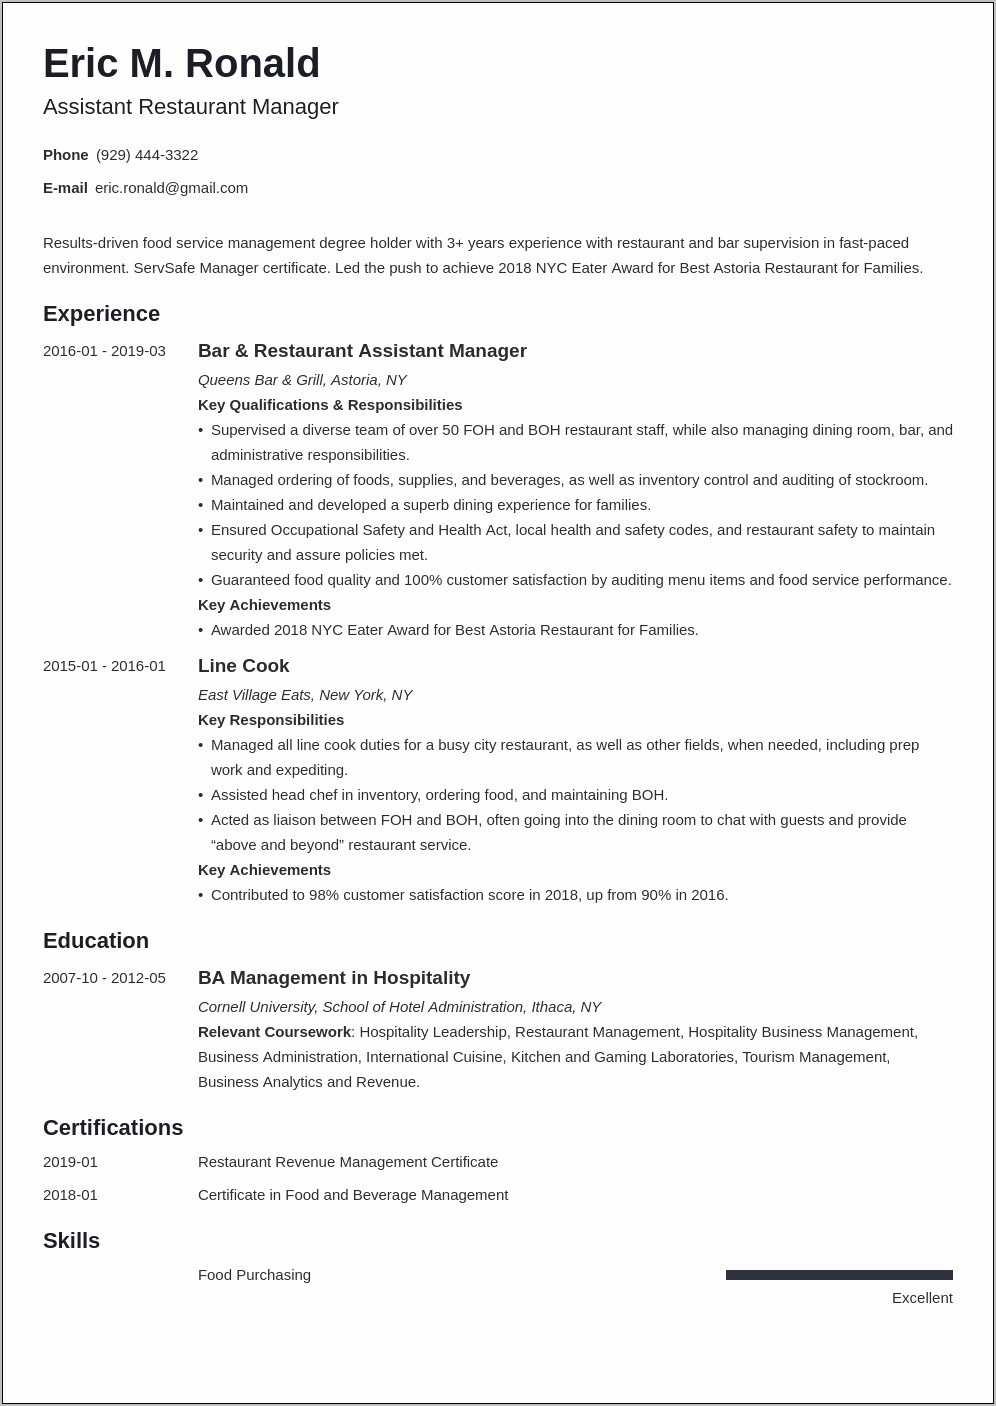 Resume Core Competencies Restaurant Management